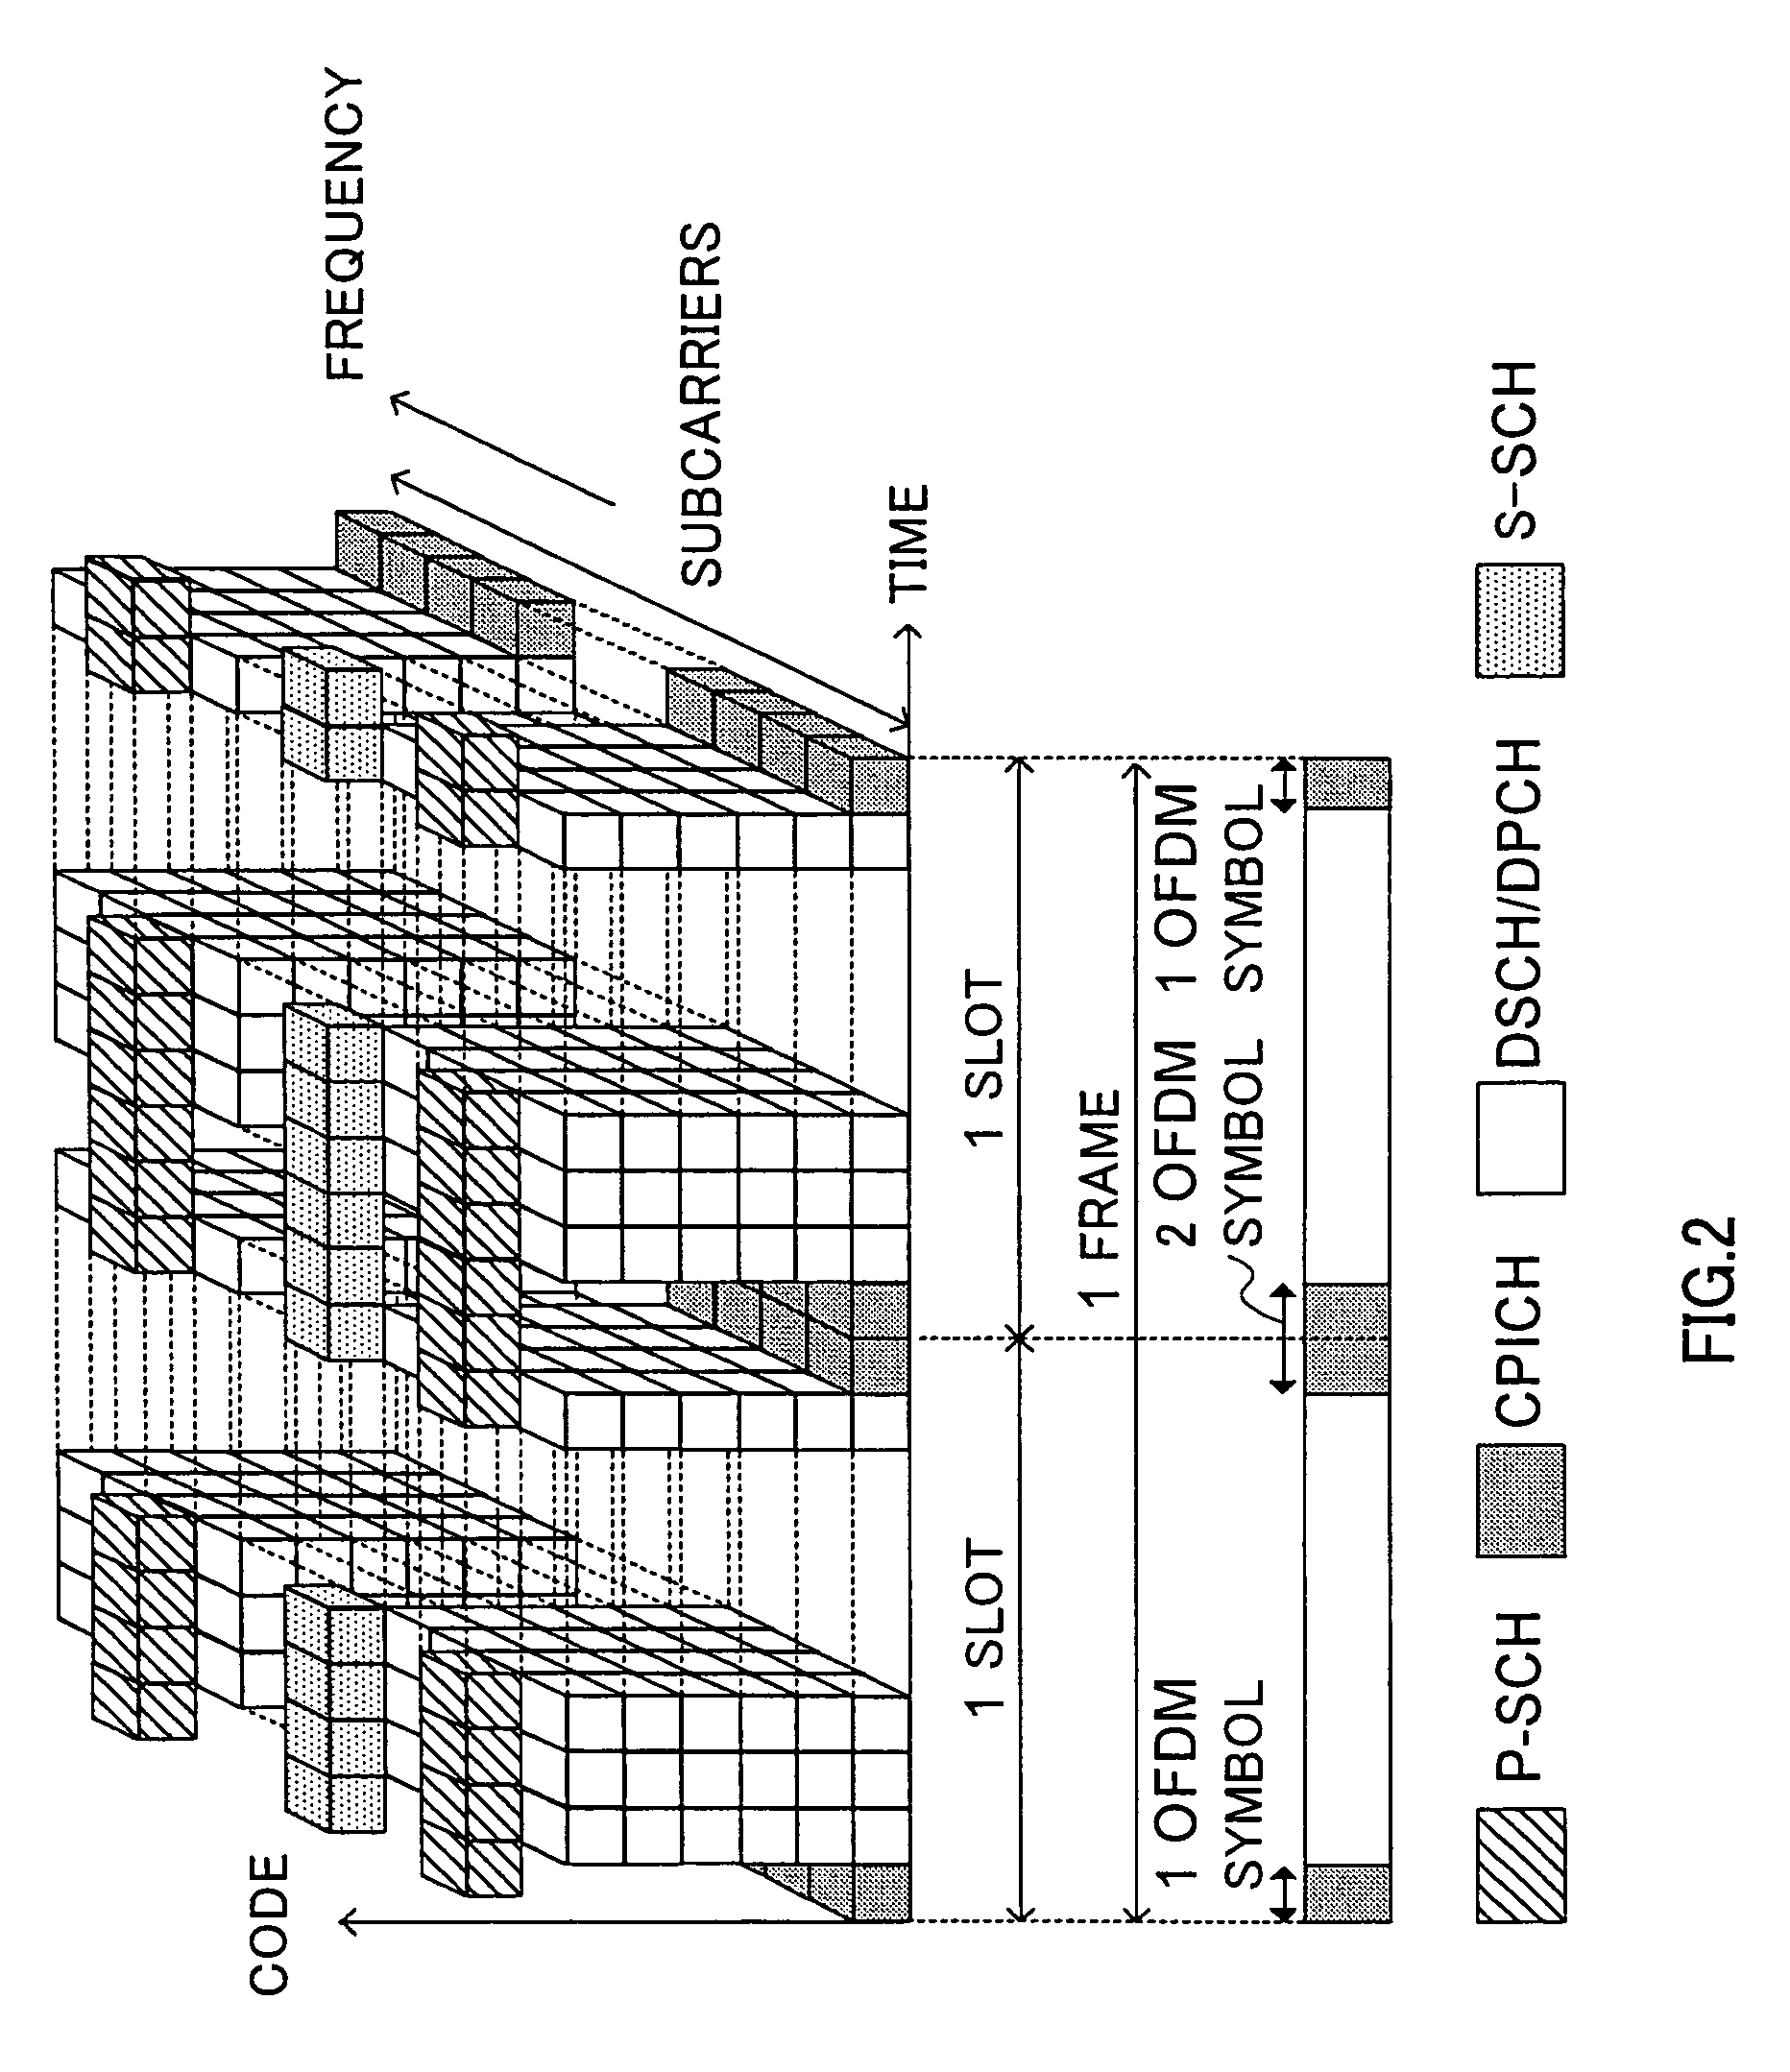 Multi-carrier transmission/reception apparatus